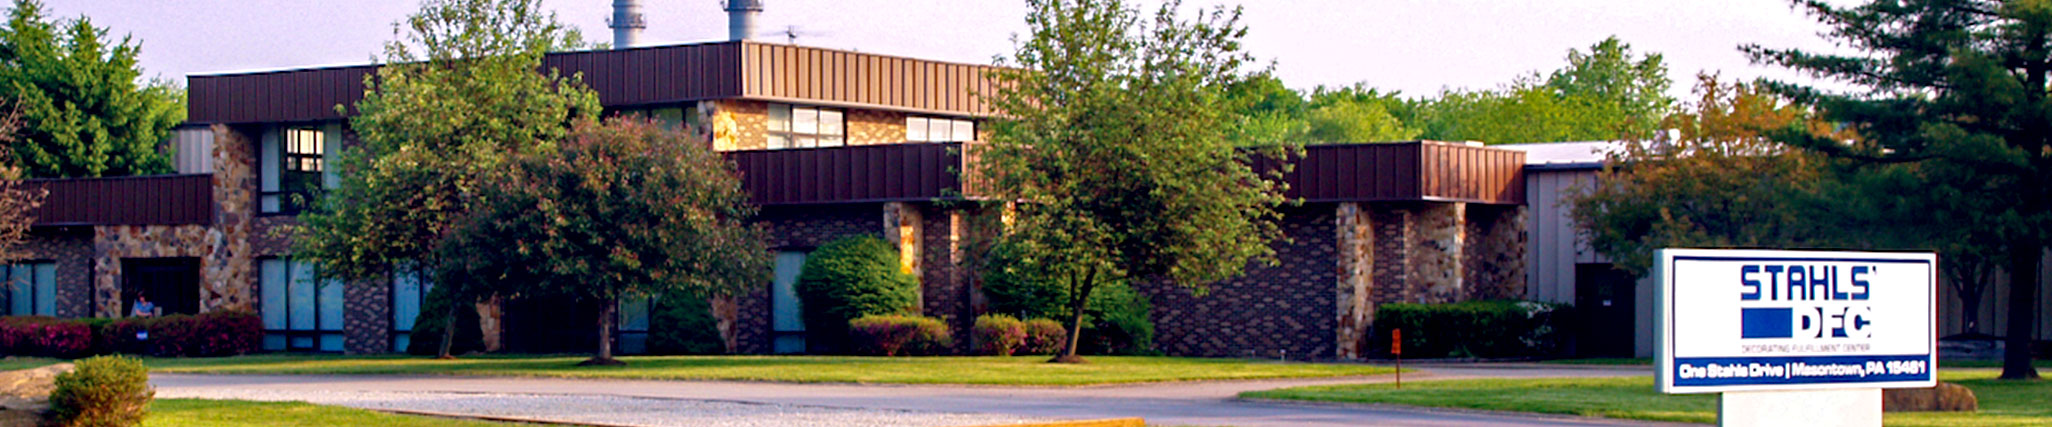 Stahls' DFC Headquarters